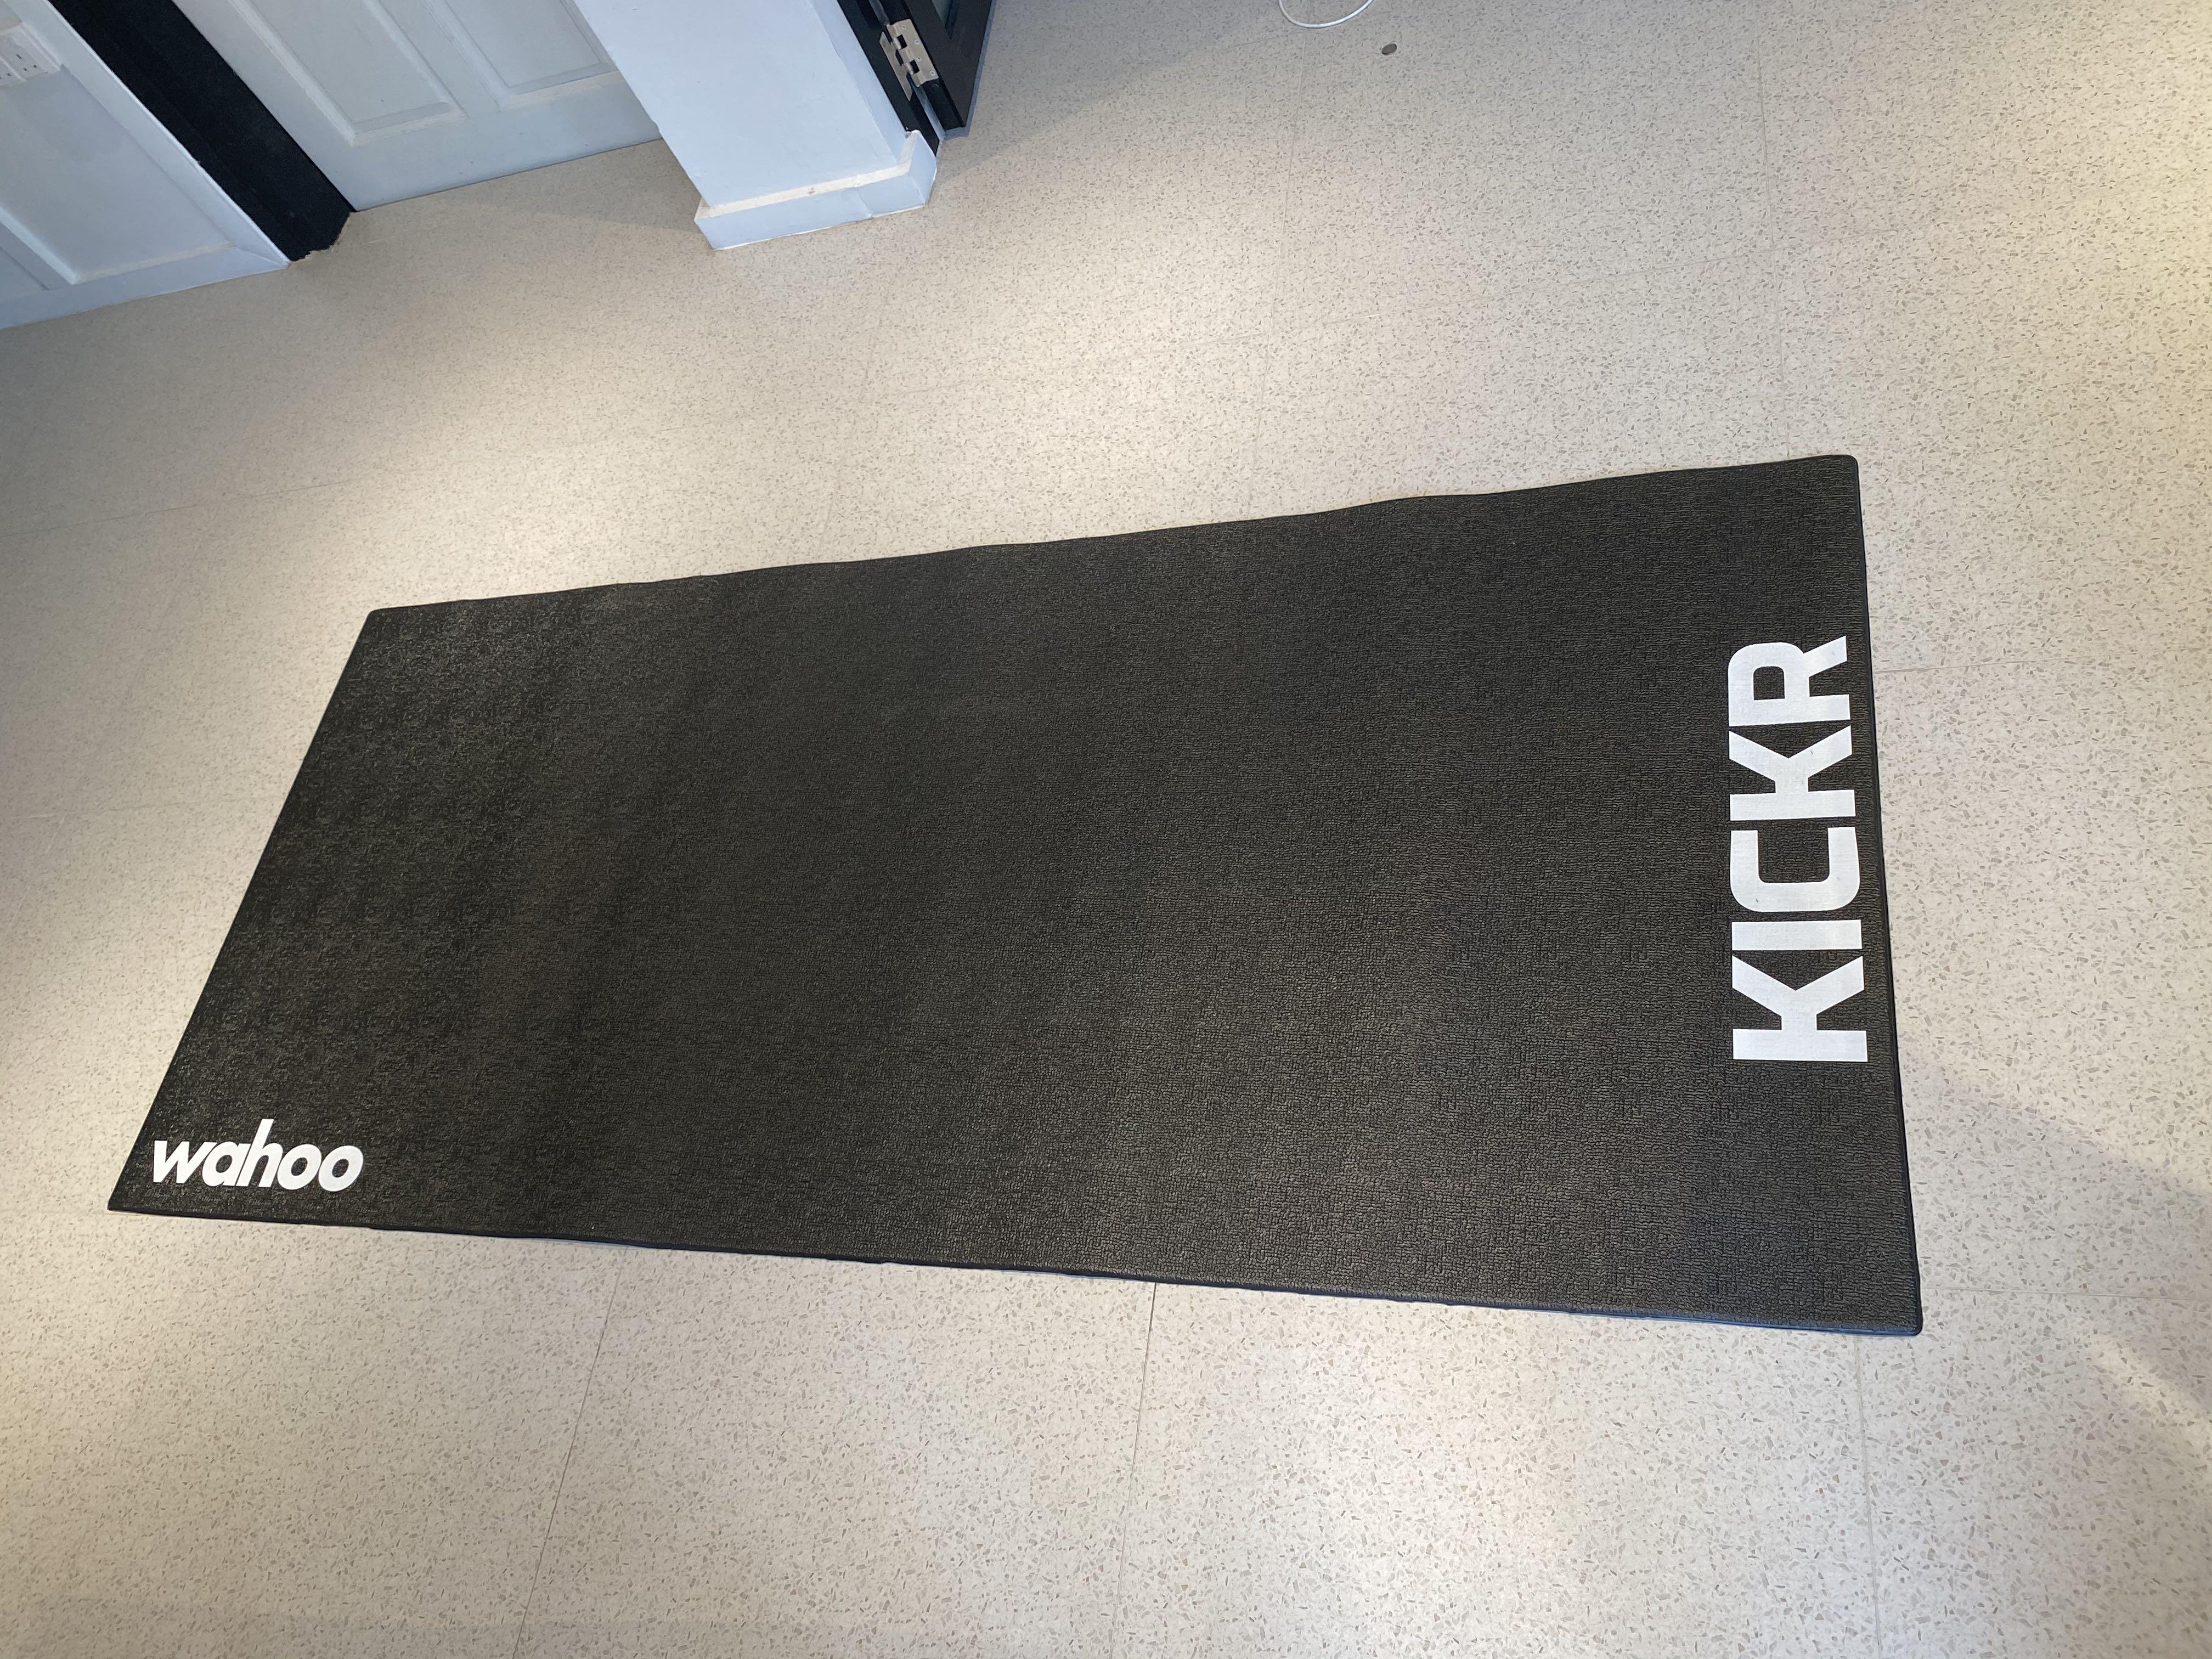 wahoo kickr turbo trainer floor mat